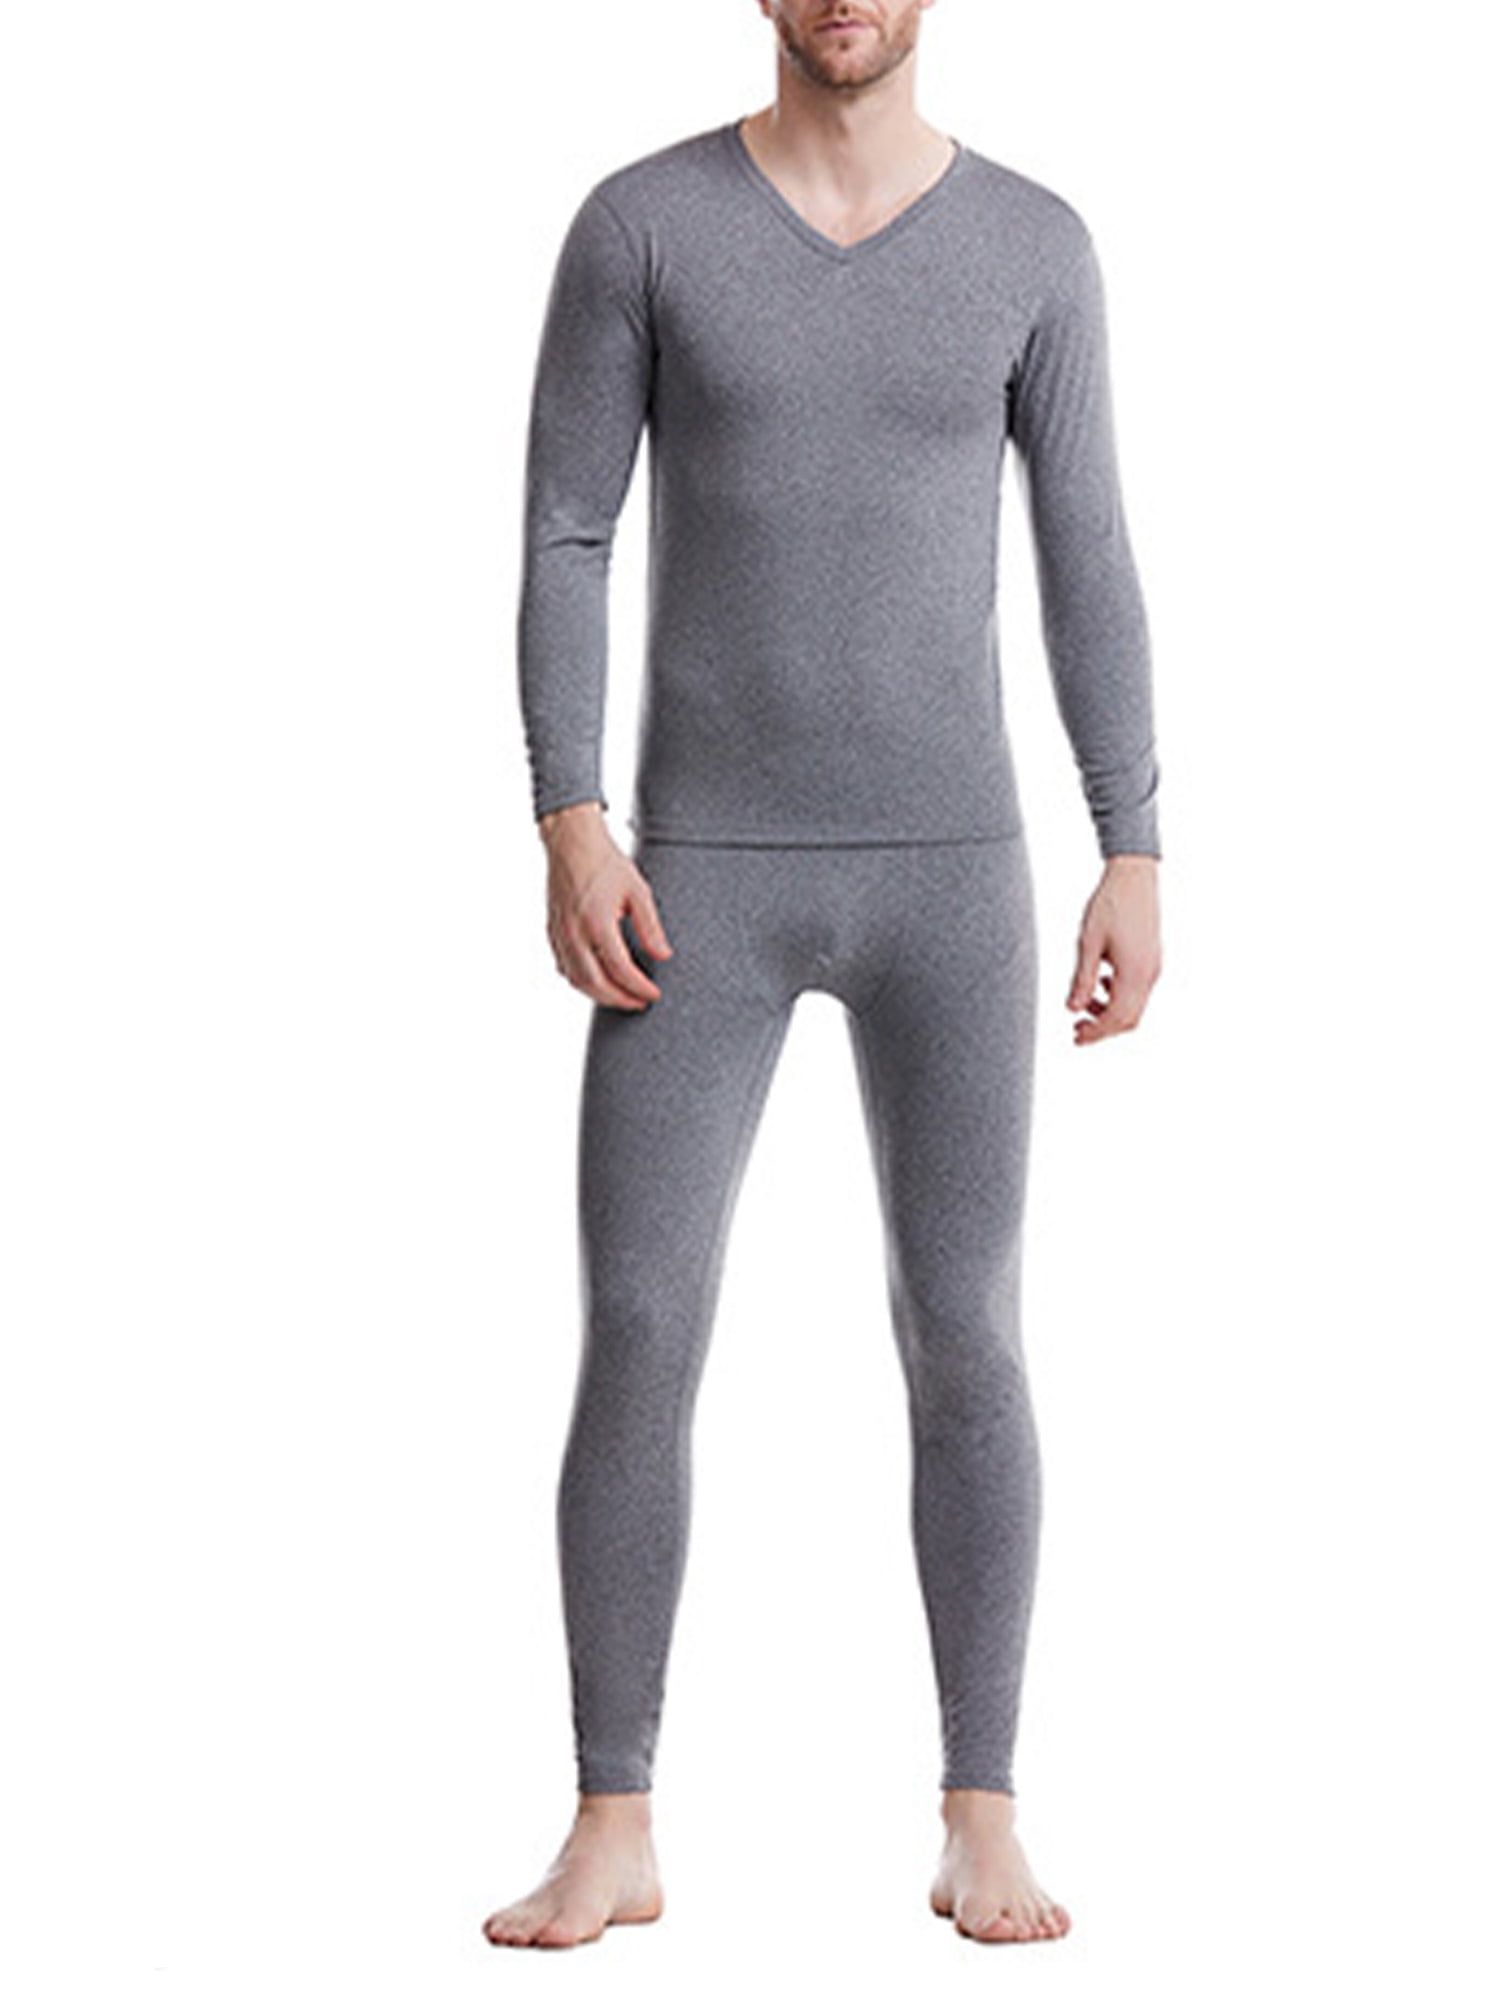 Nerefy Plus Size Winter Warm Mens Thermal Underwear Long Sleeves Sleepwear Pajama Sets